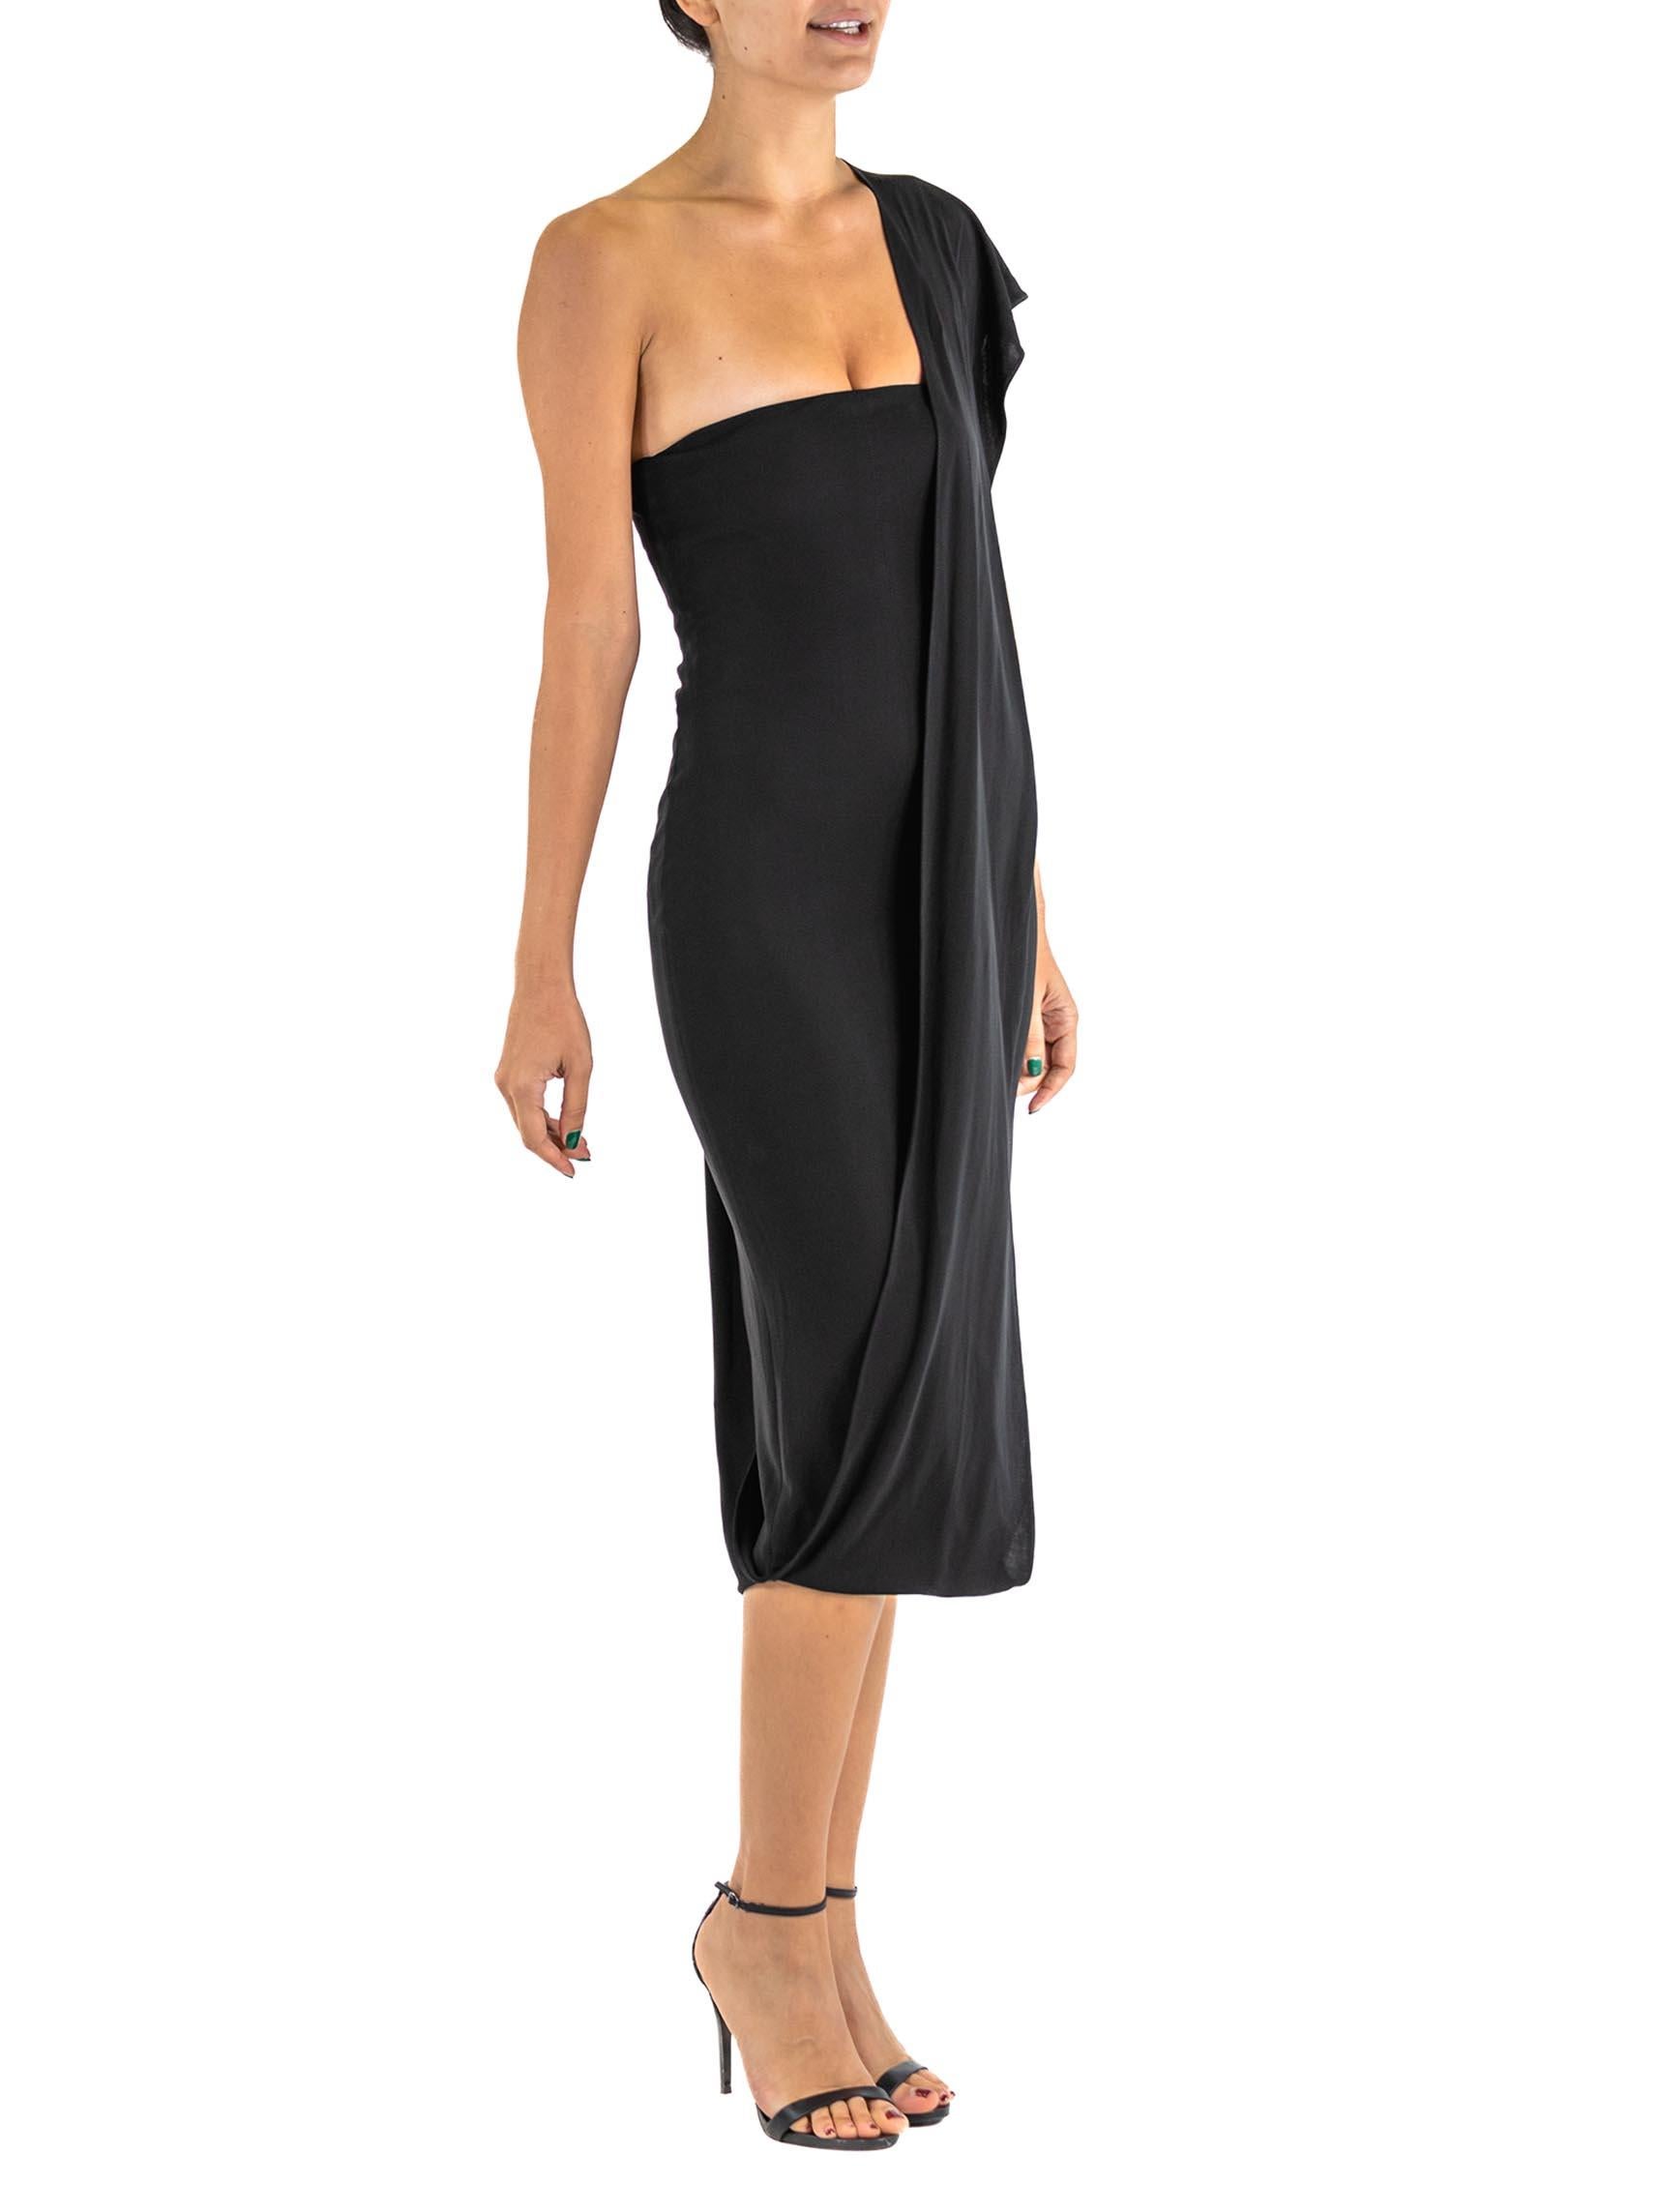 1990S HERVE LEGER Black Rayon Blend Strapless Dress With One Shoulder Sash For Sale 3